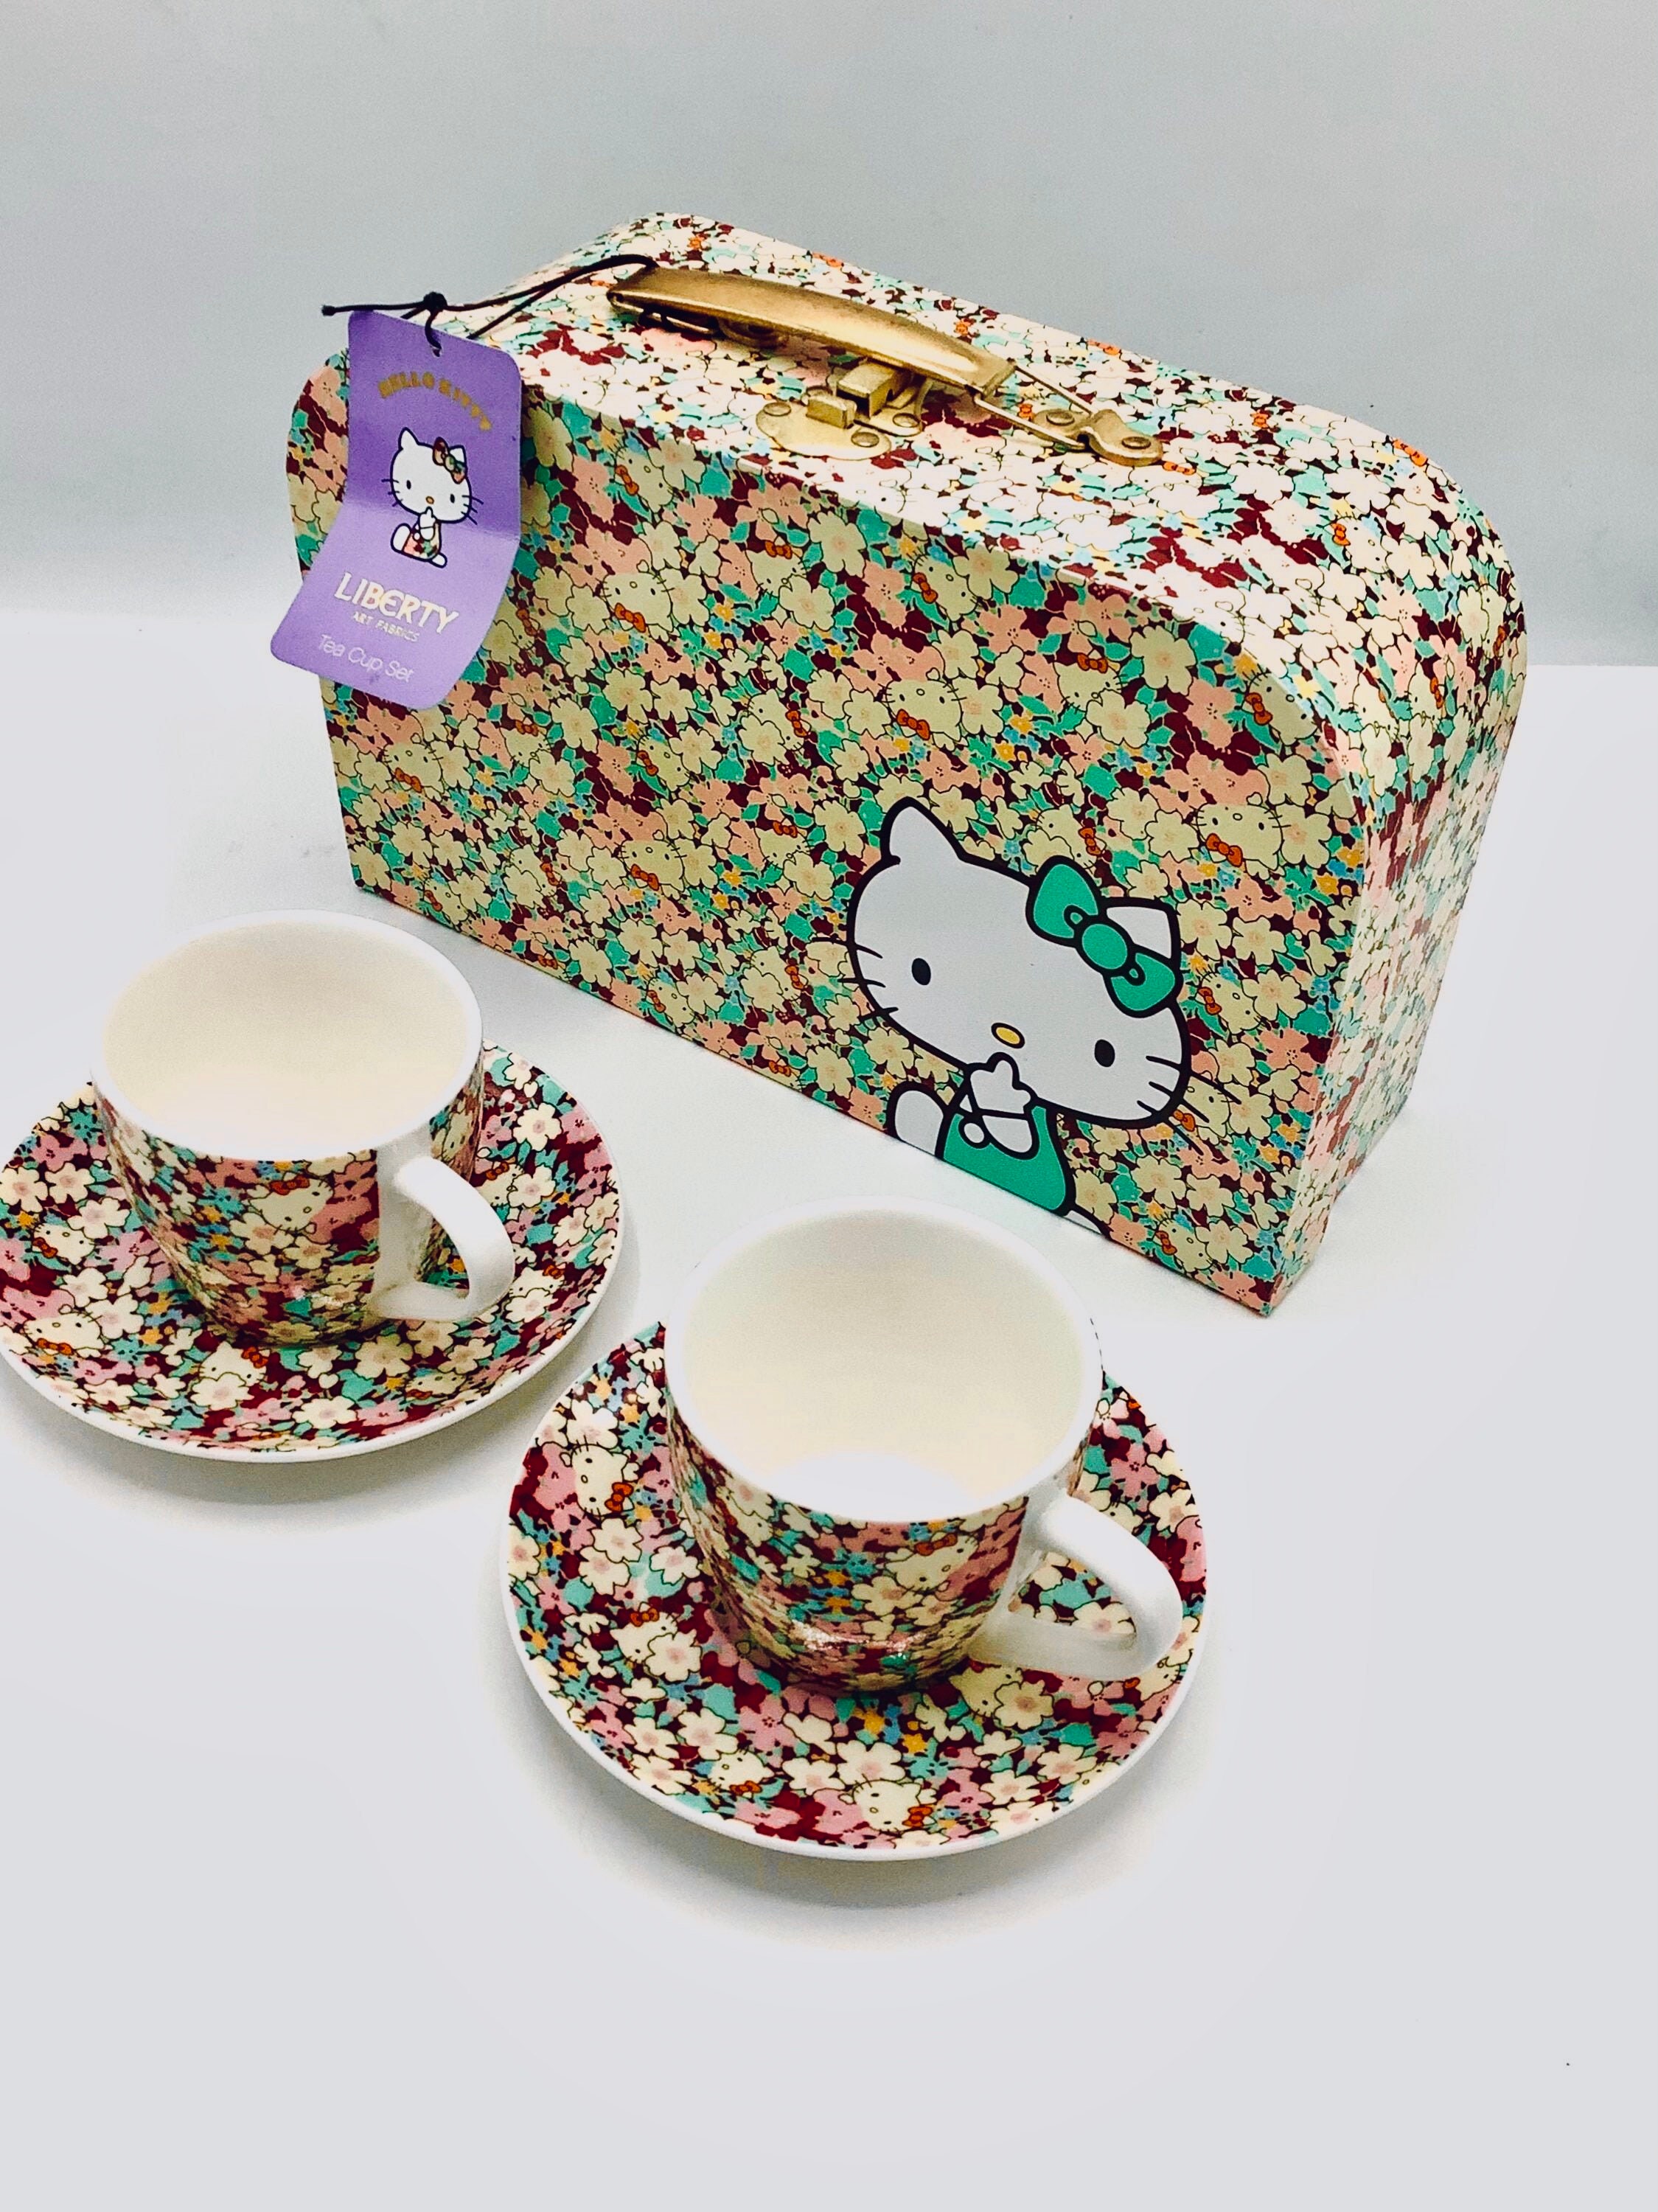 Hello Kitty Glass Cup – Prestige Prints